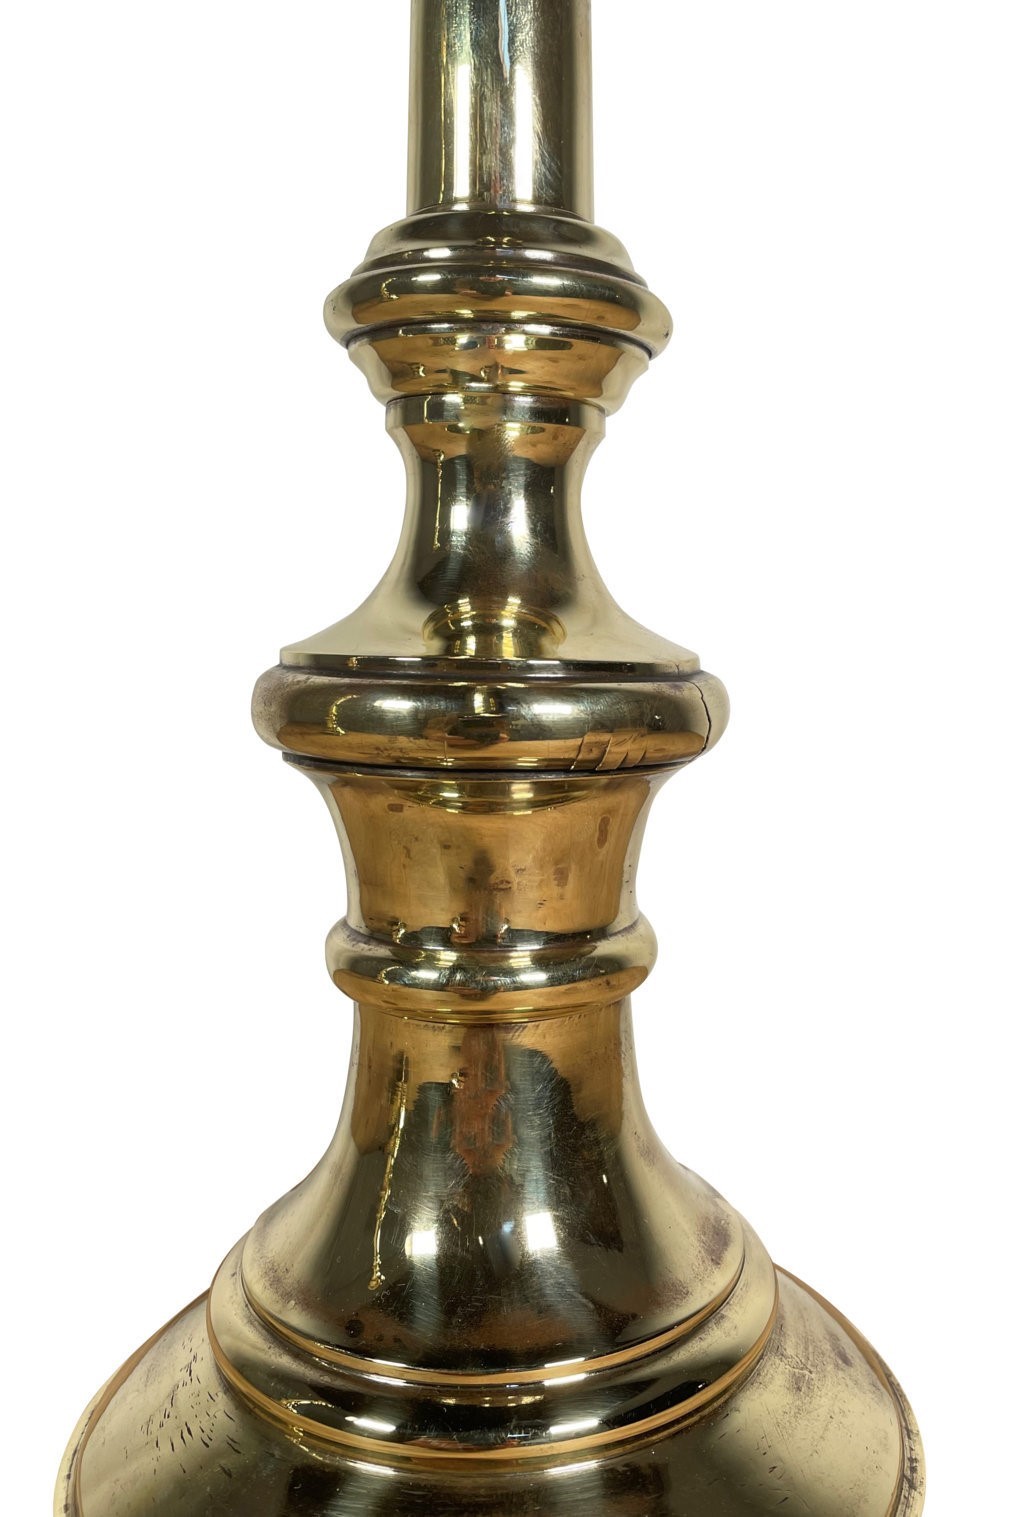 Pair of Polished Brass Pricket Sticks › Fontaine Decorative